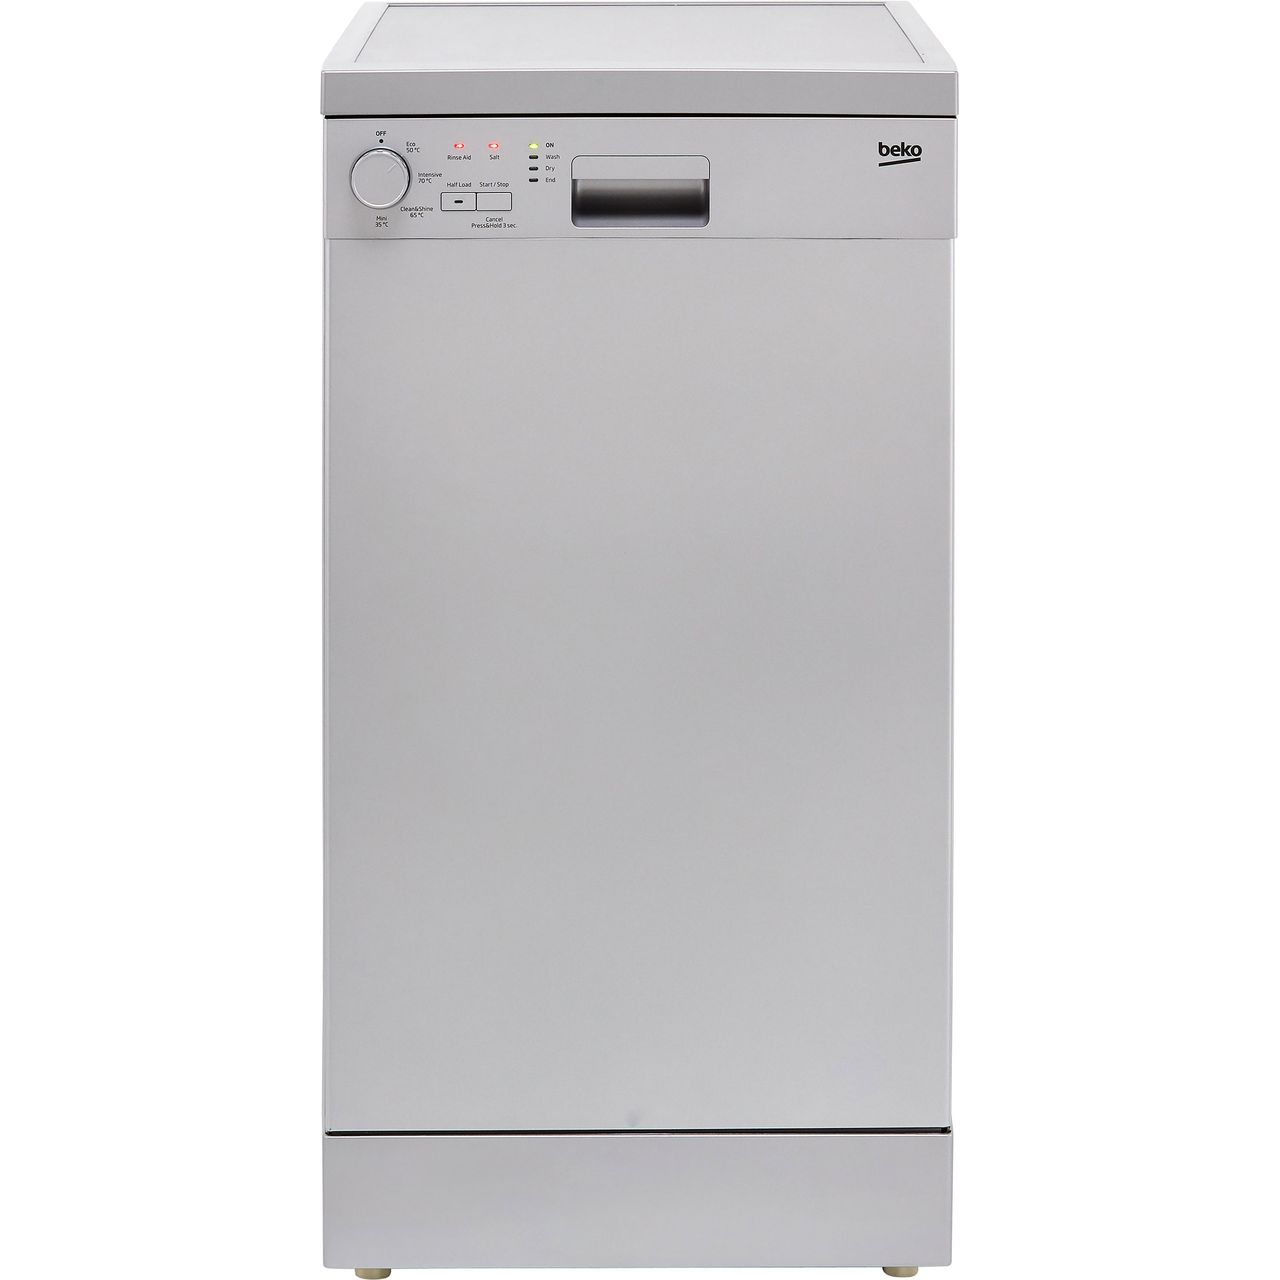 DFS04010S_SI | Beko Slimline Dishwasher 